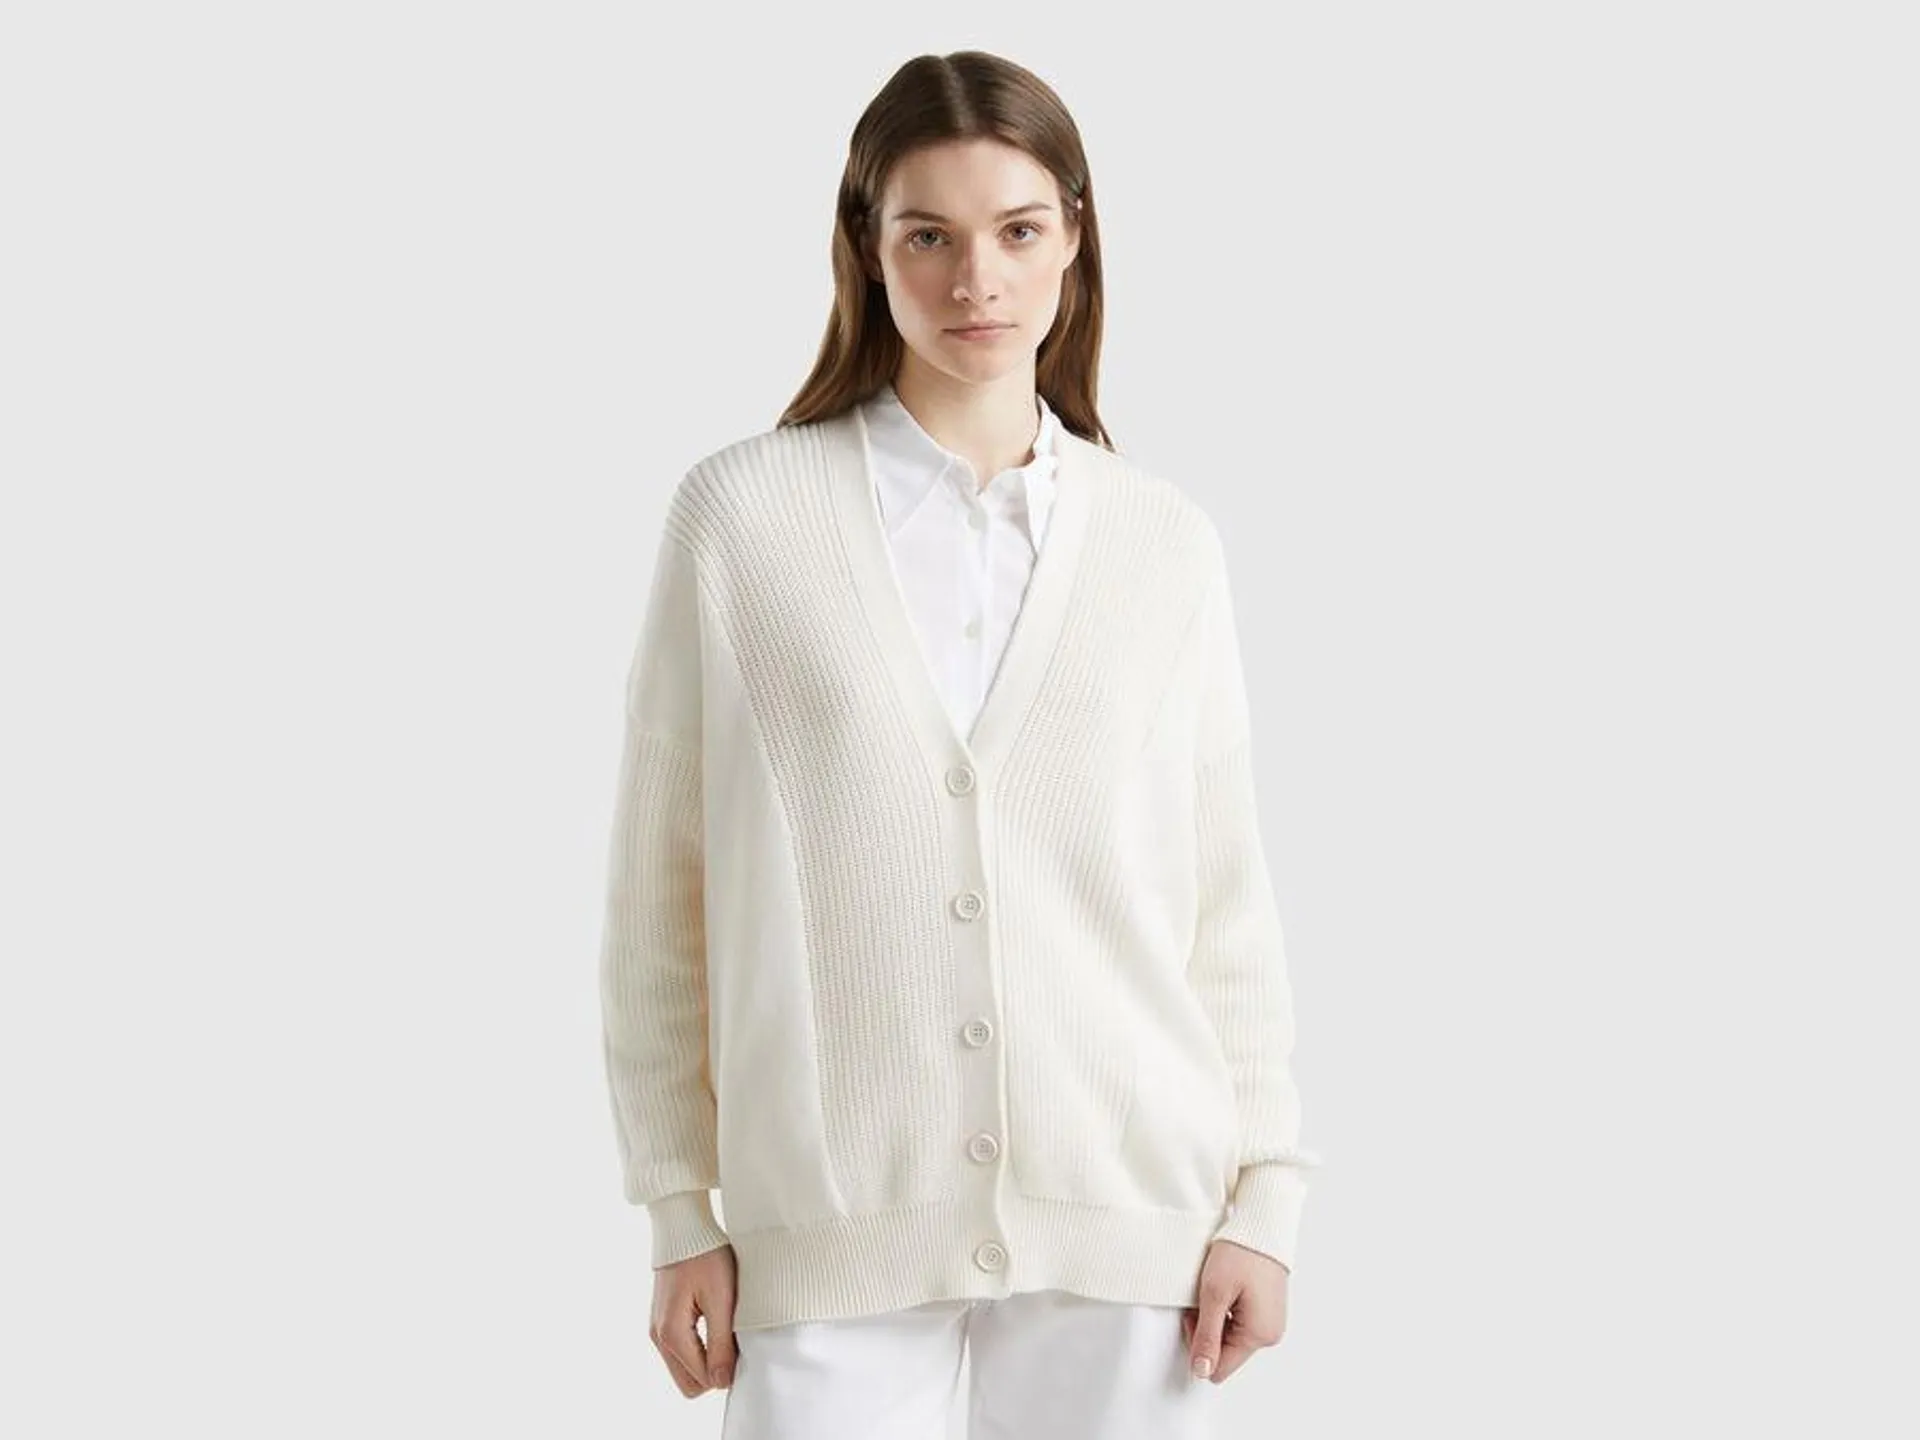 Creamy white 100% cotton cardigan